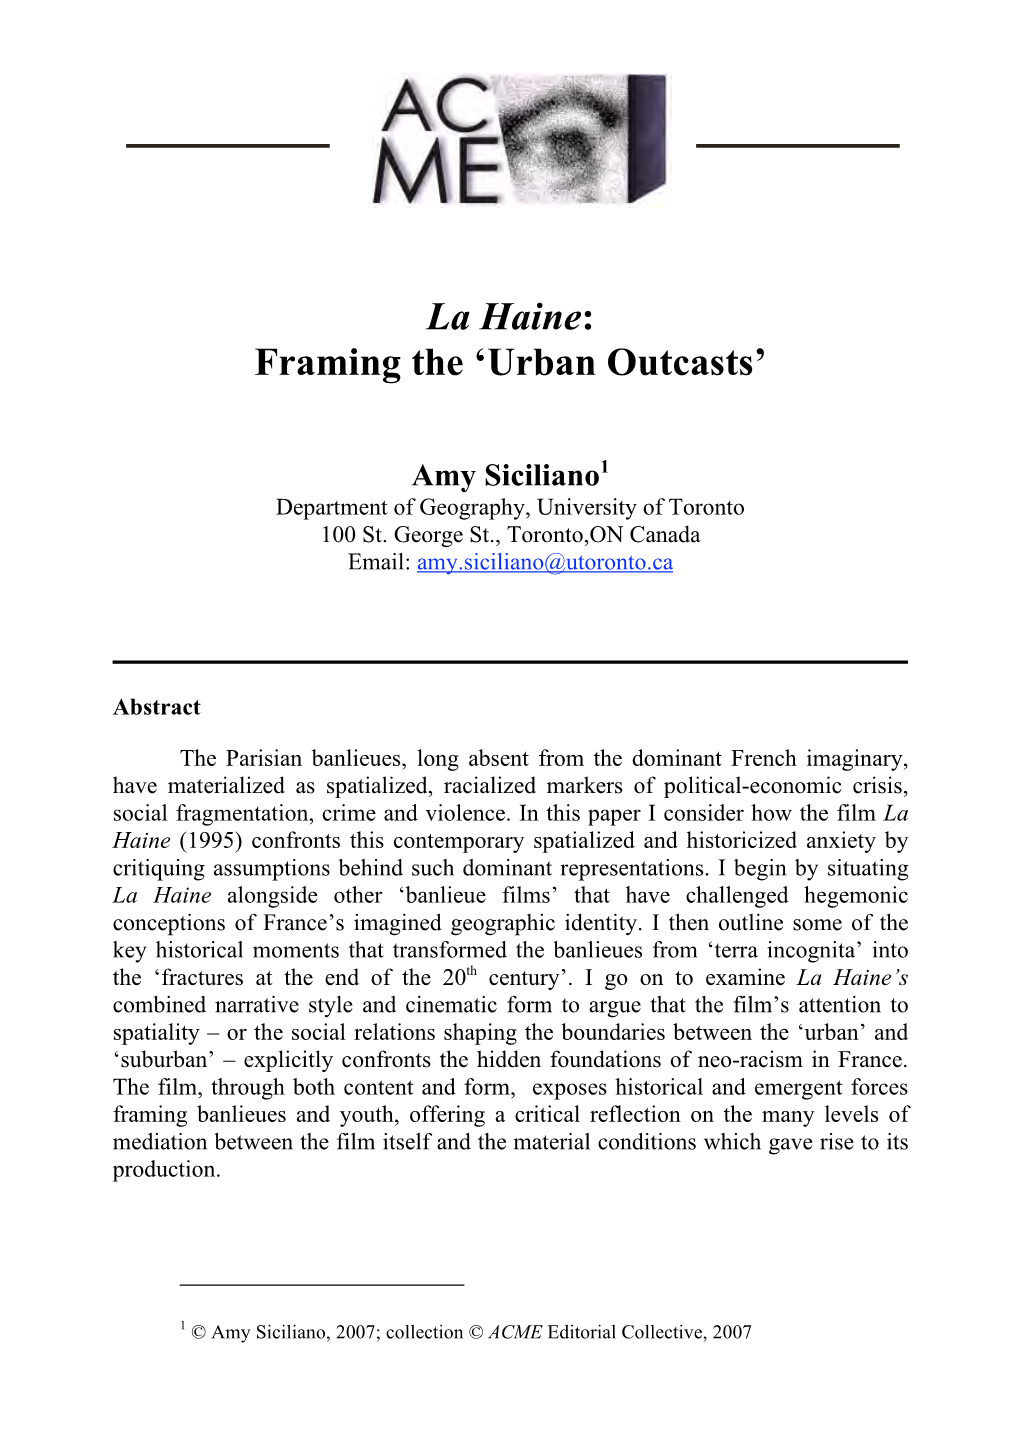 La Haine: Framing the ‘Urban Outcasts’